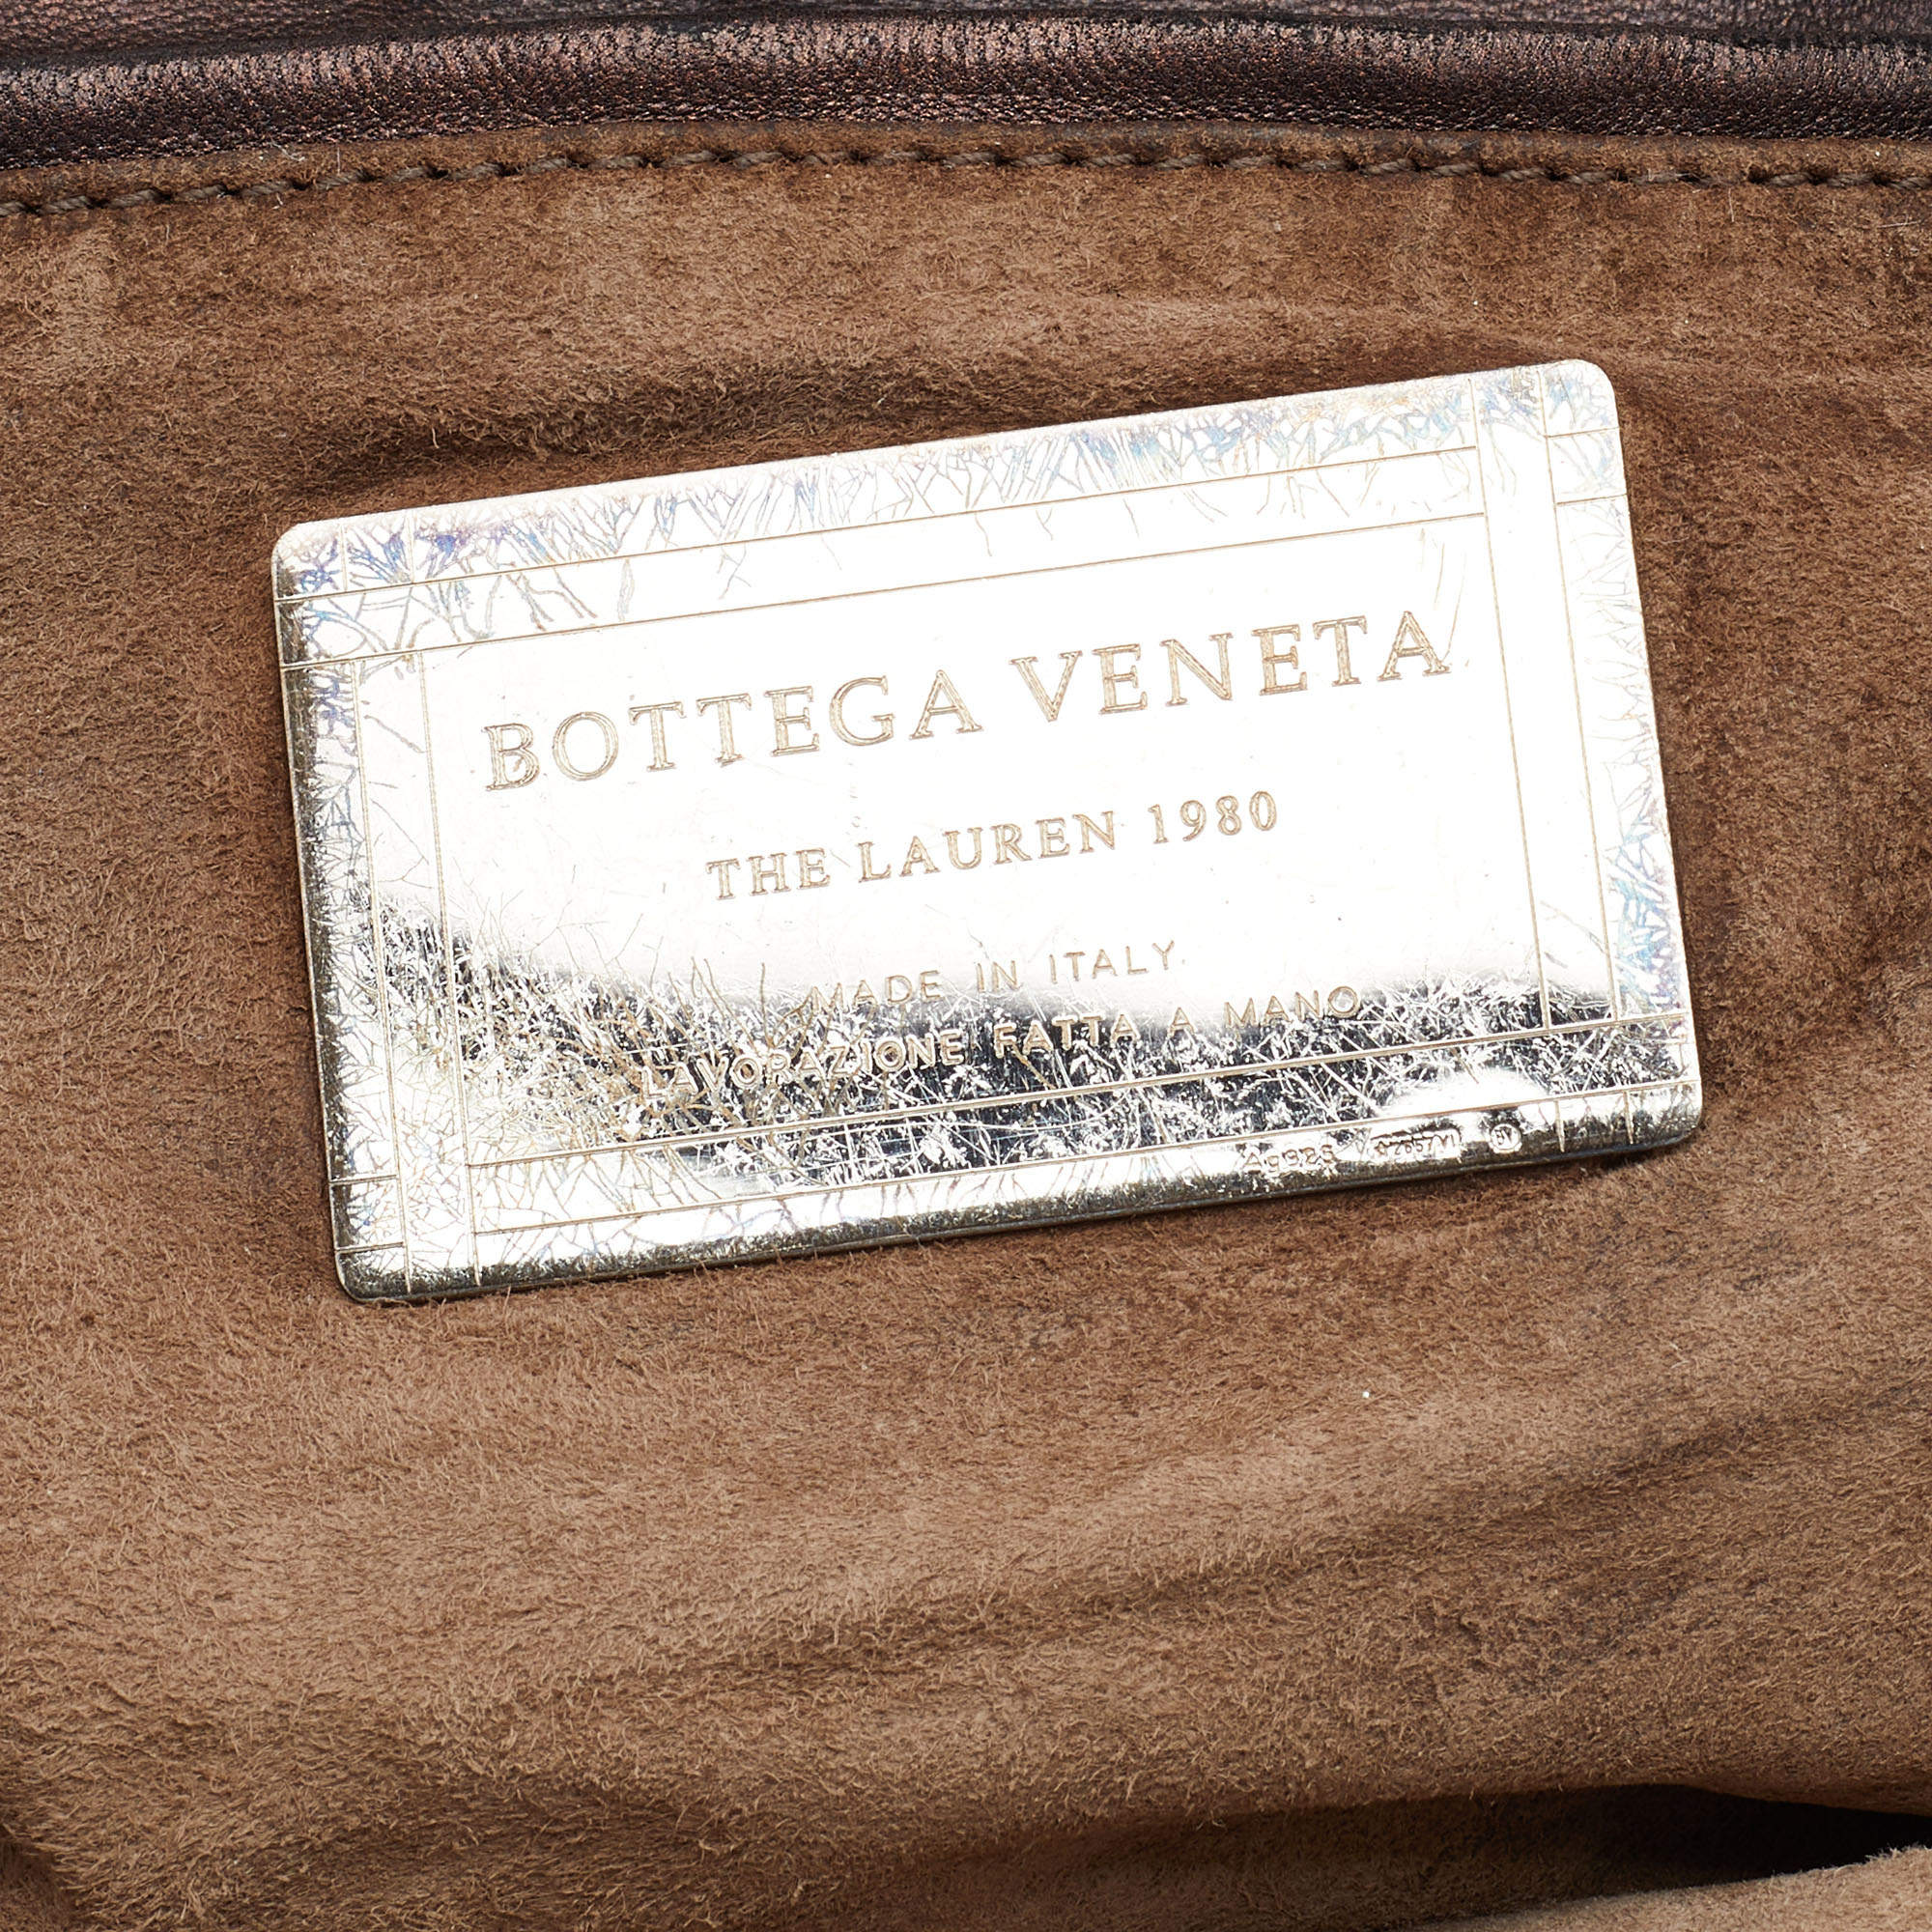 Clutches Bottega Veneta - The Lauren 1980 silver Intrecciato clutch -  481815VCK711227